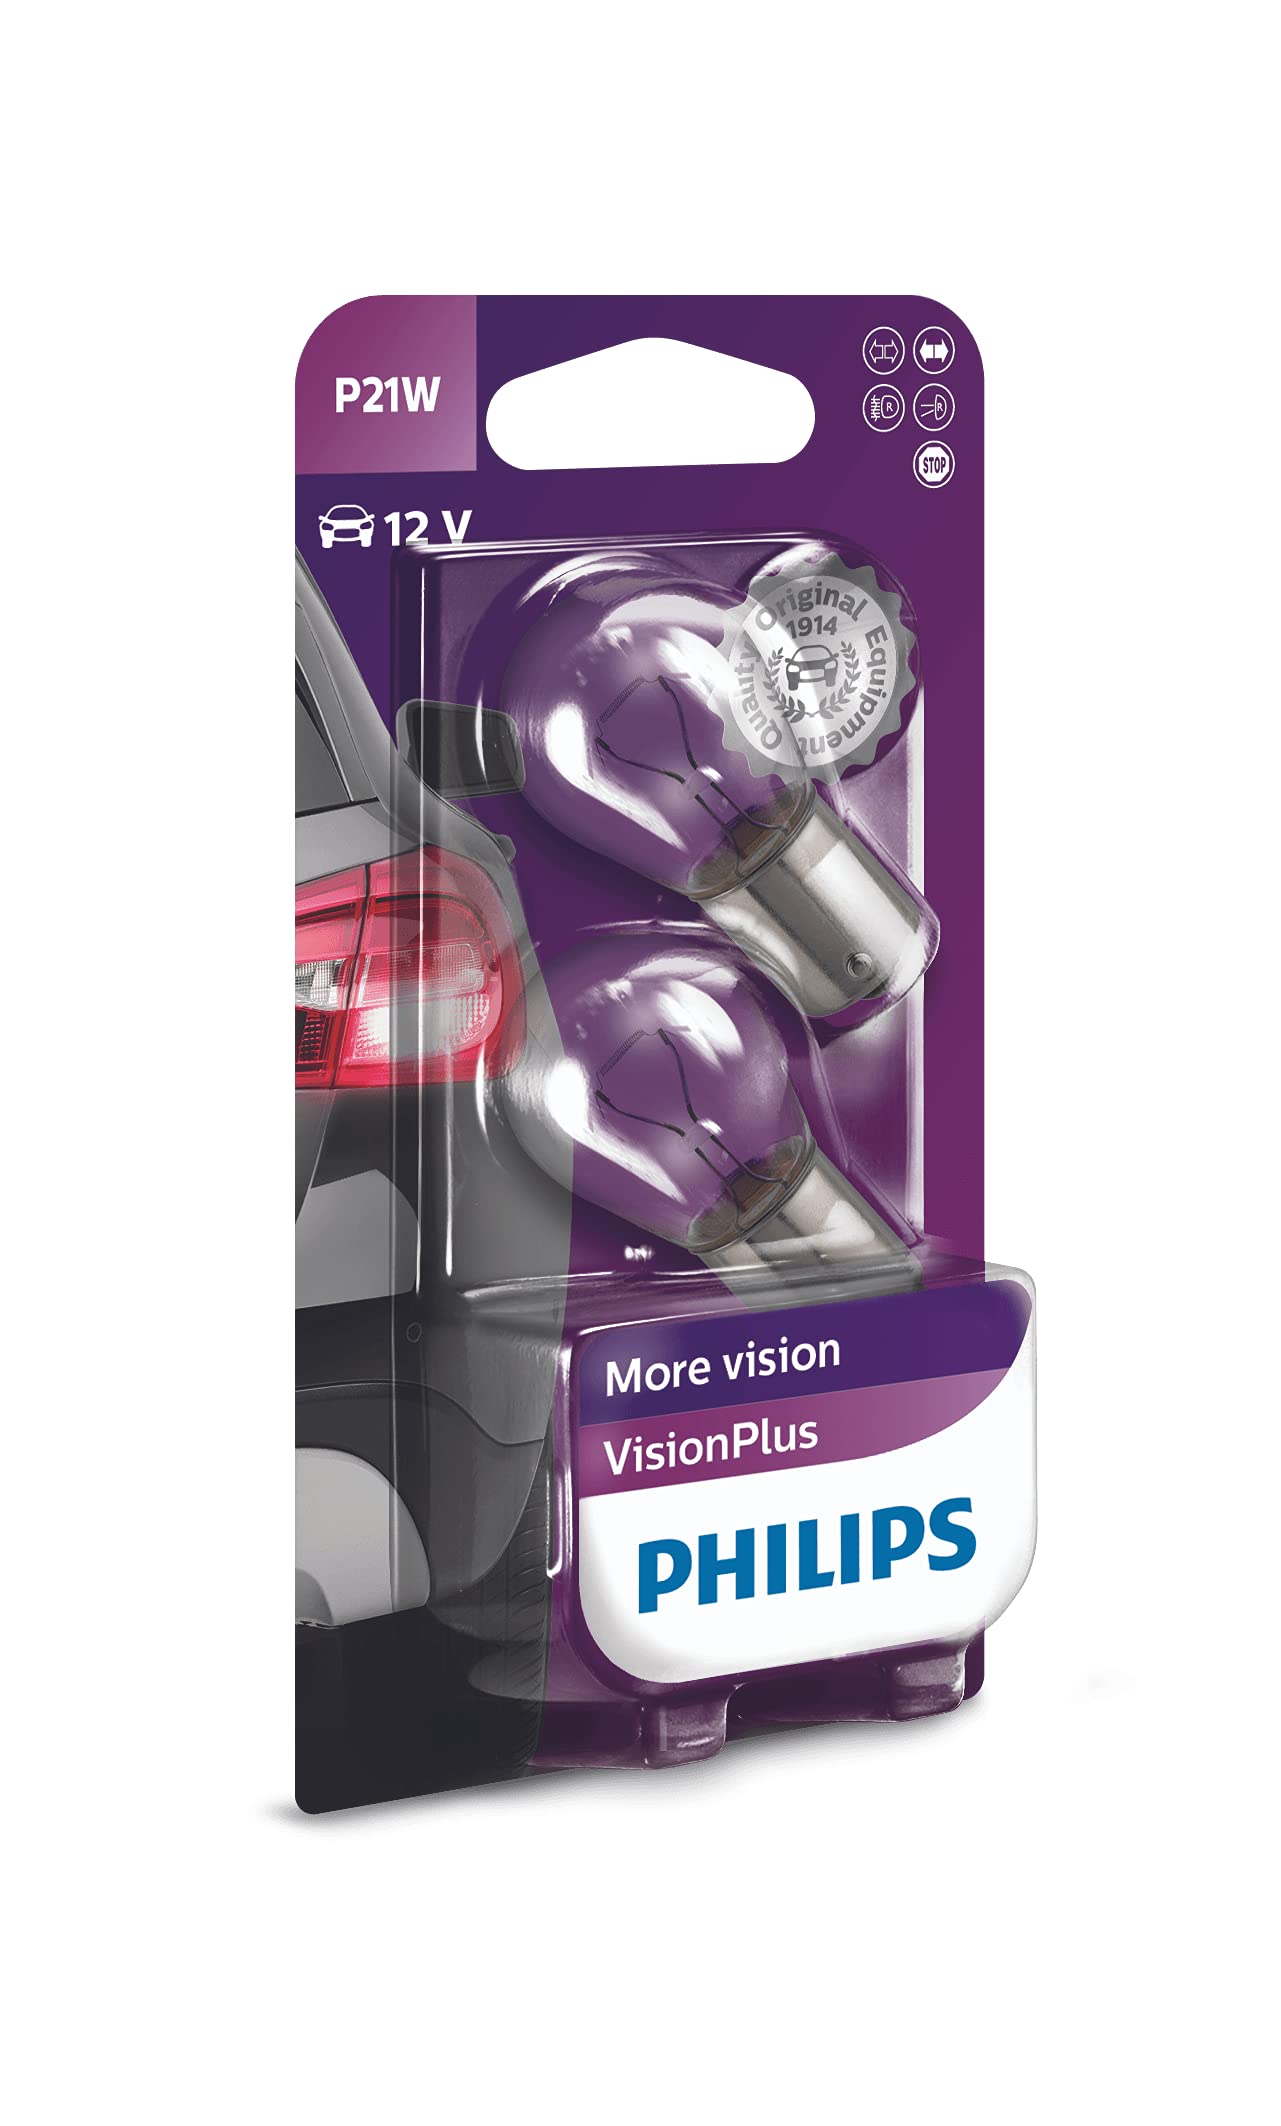 P21W 12V 21W BA15s VisionPlus 60% Blister 2st. Philips von Philips automotive lighting